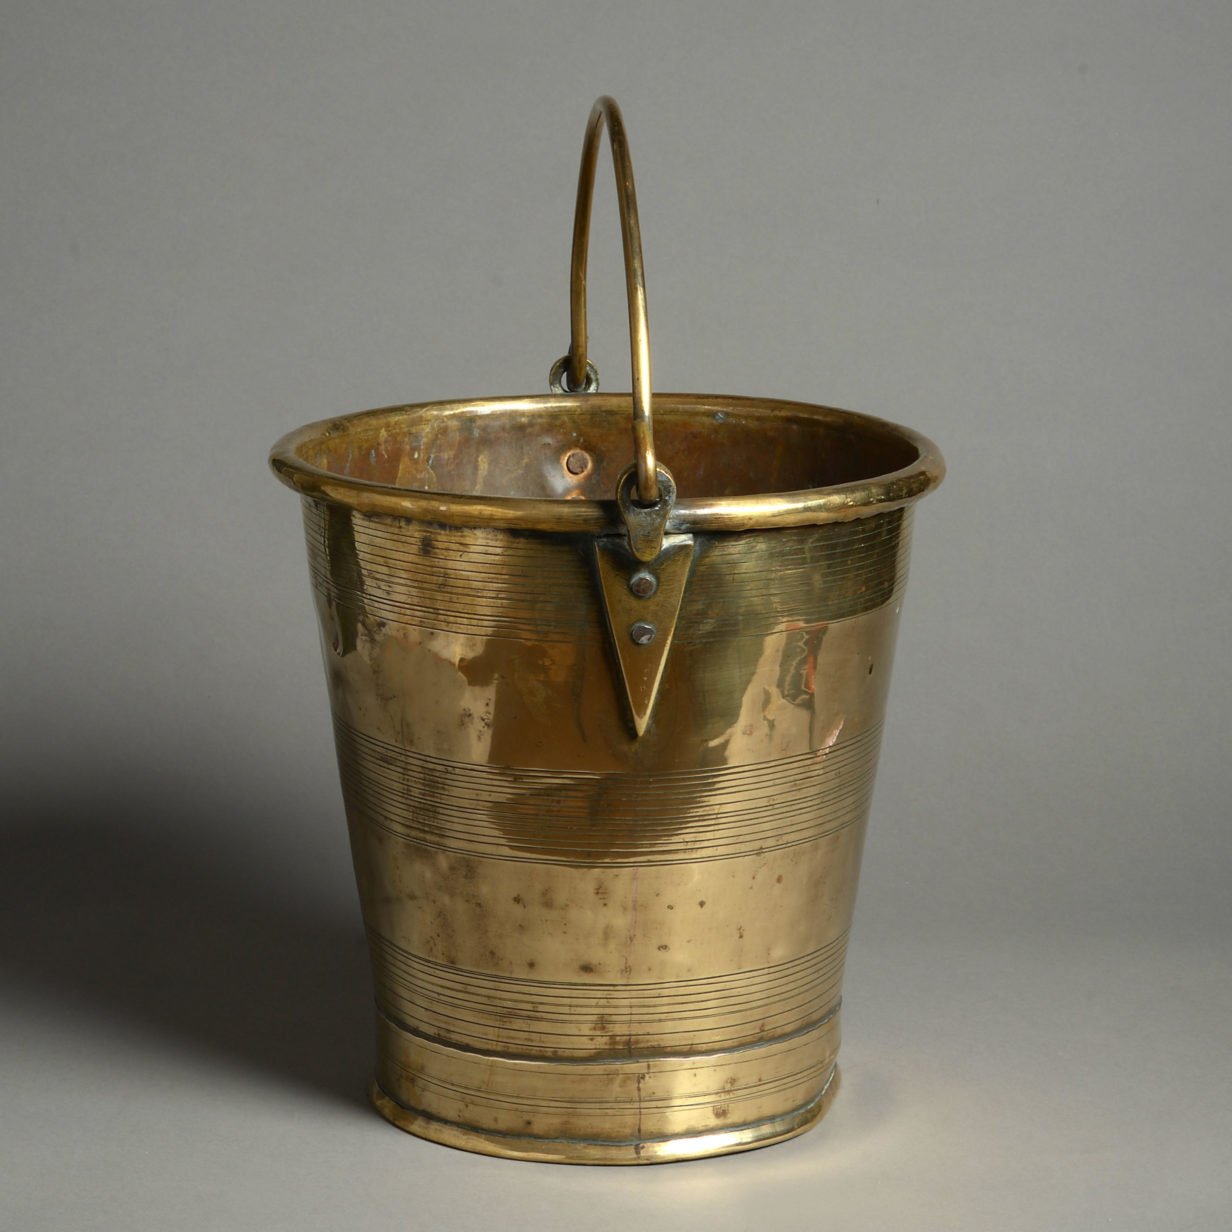 A 19th century turned brass fire bucket